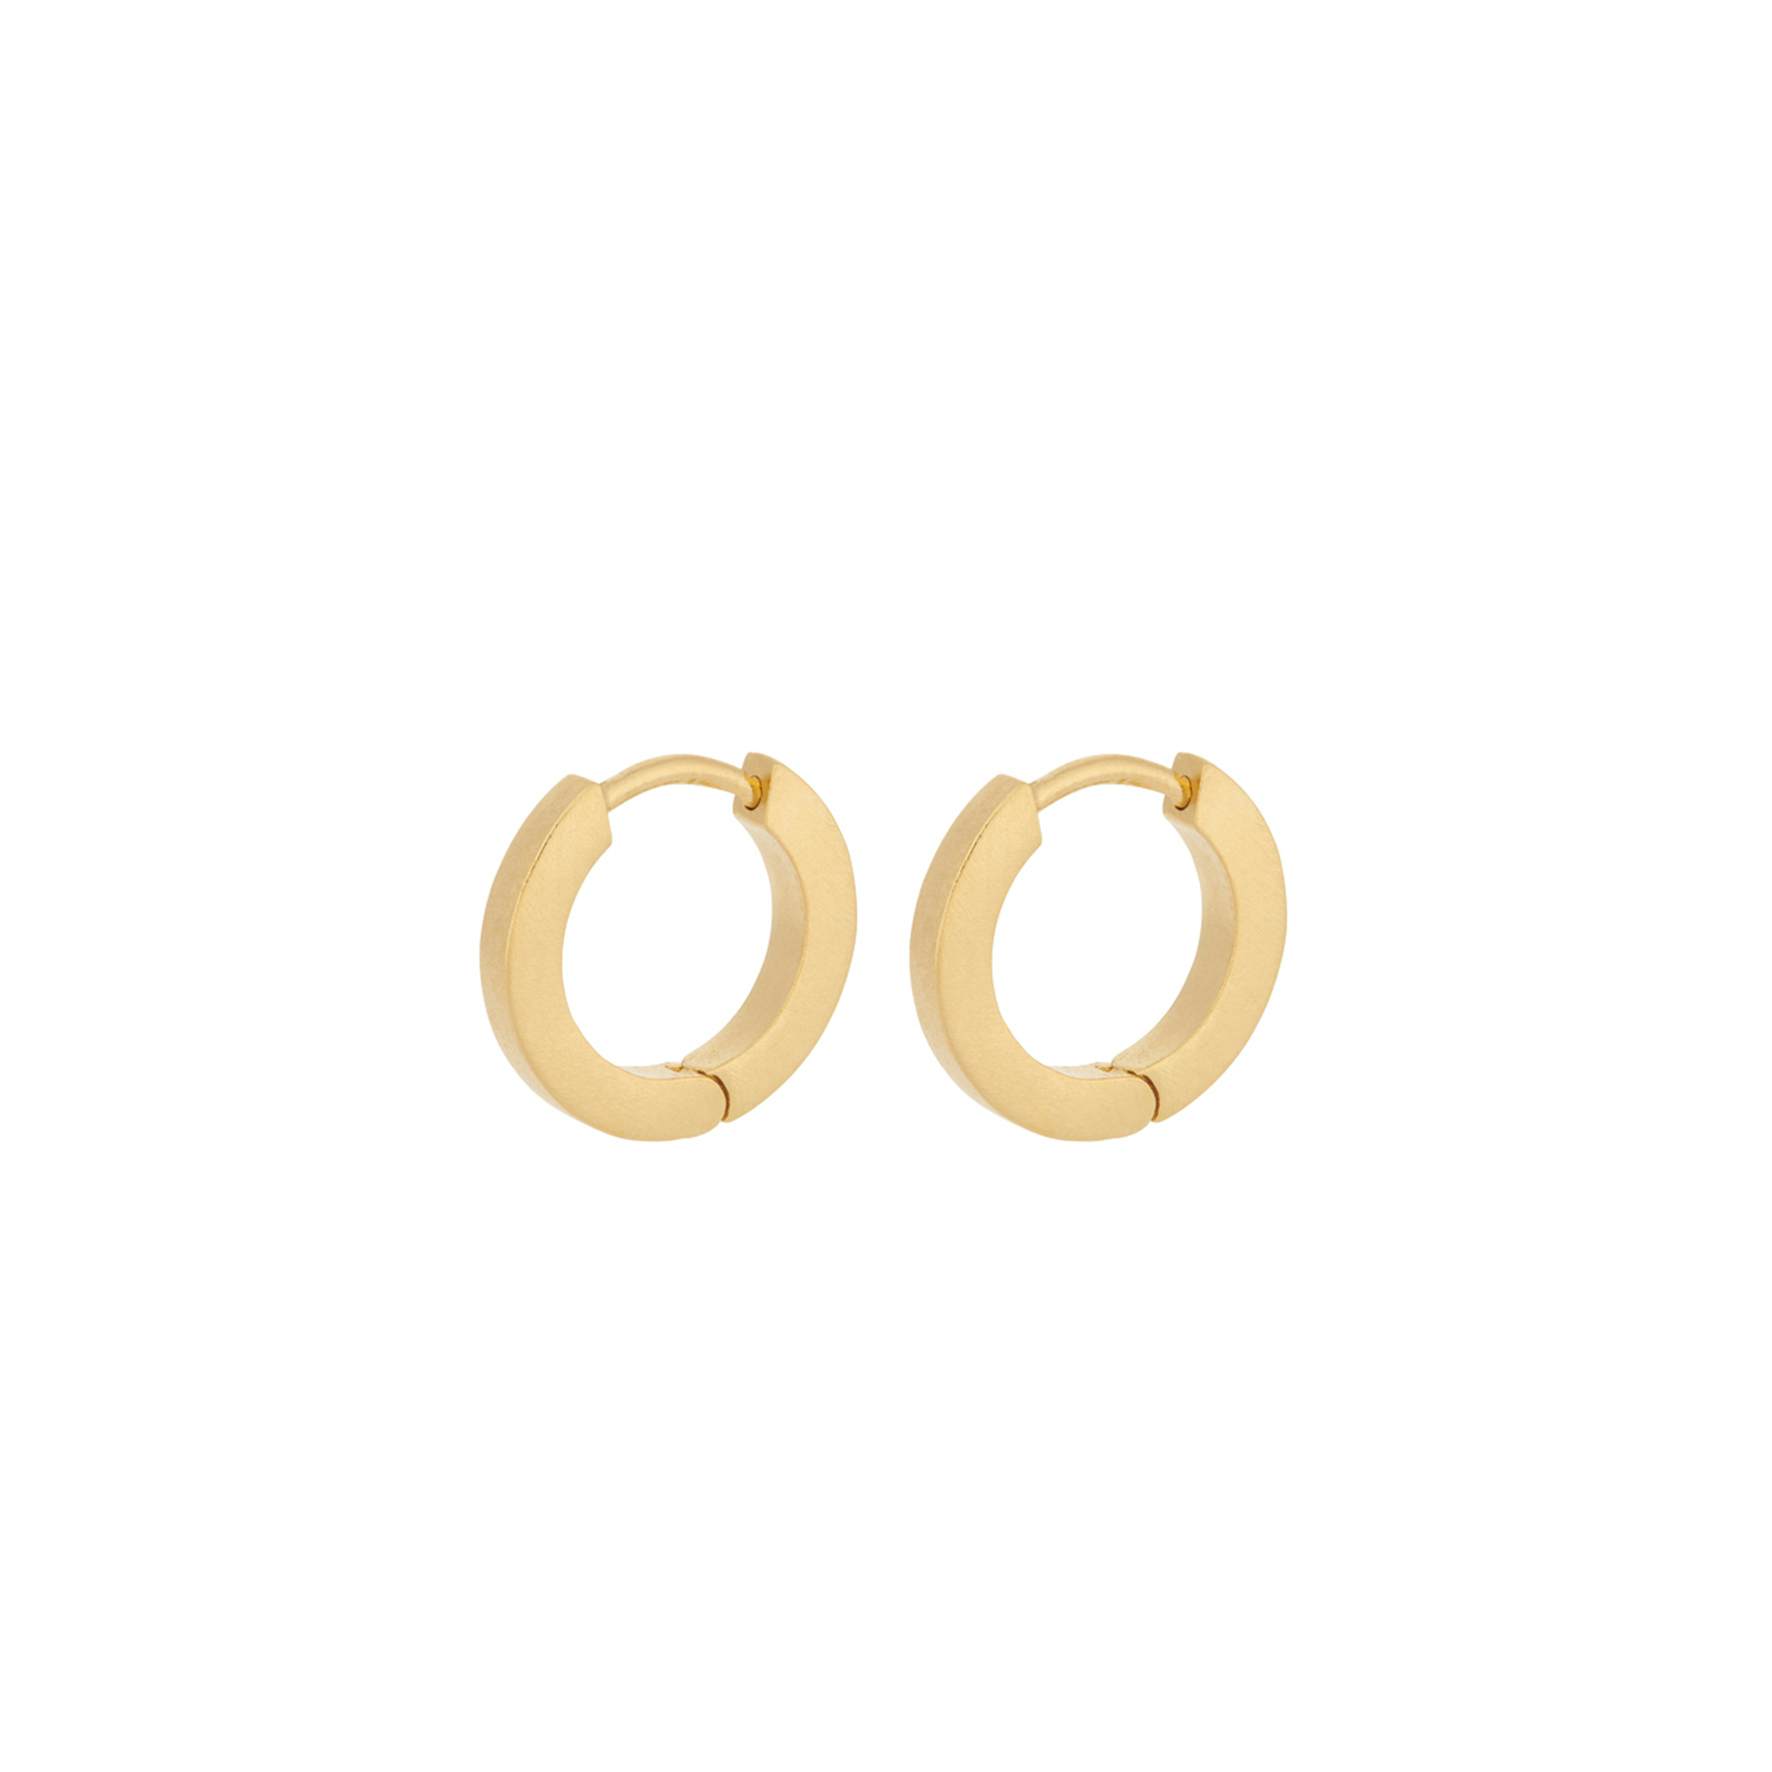 Rock Huggie Earrings von Pernille Corydon in Vergoldet-Silber Sterling 925